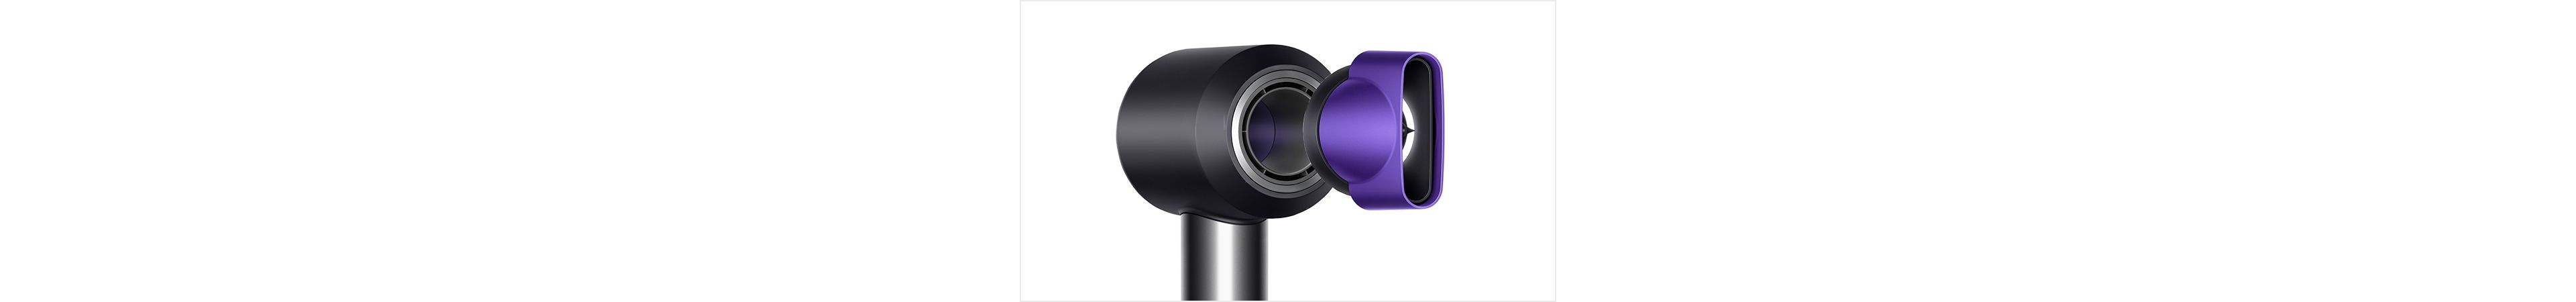 Dyson Supersonic Hair Dryer, Black/Purple - wide 8